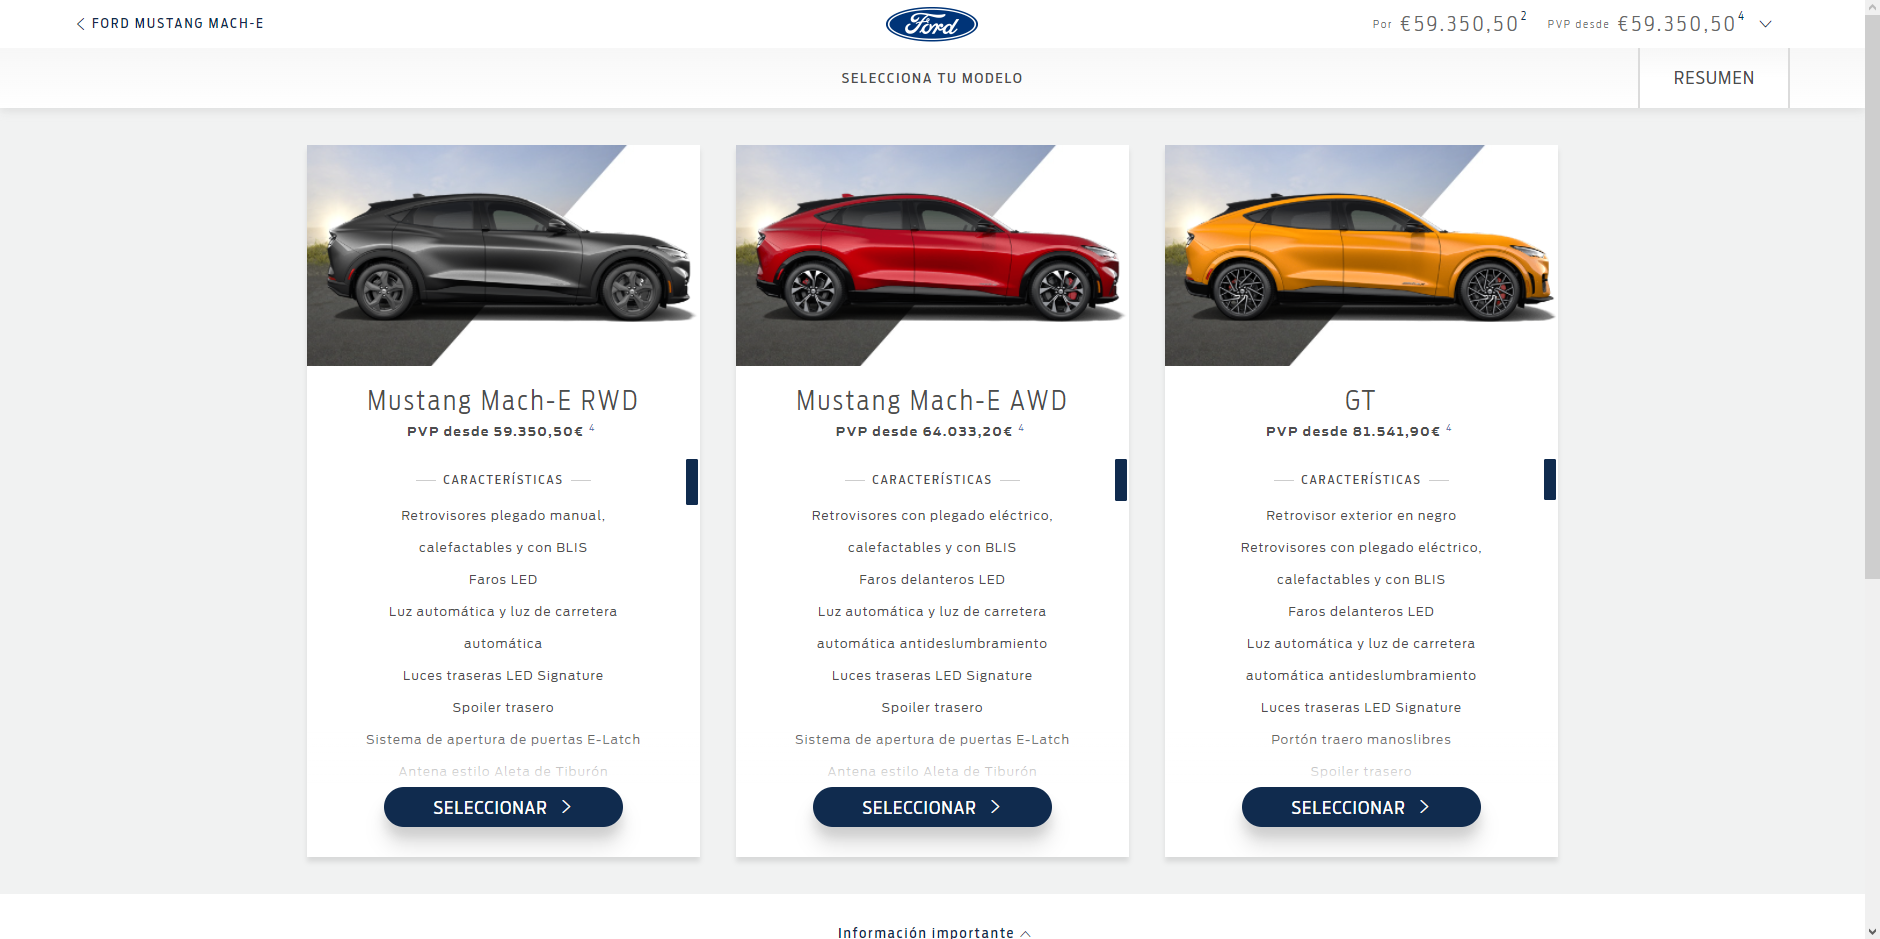 Precios en España del Ford Mustang Mach-E a fecha de abril de 2022